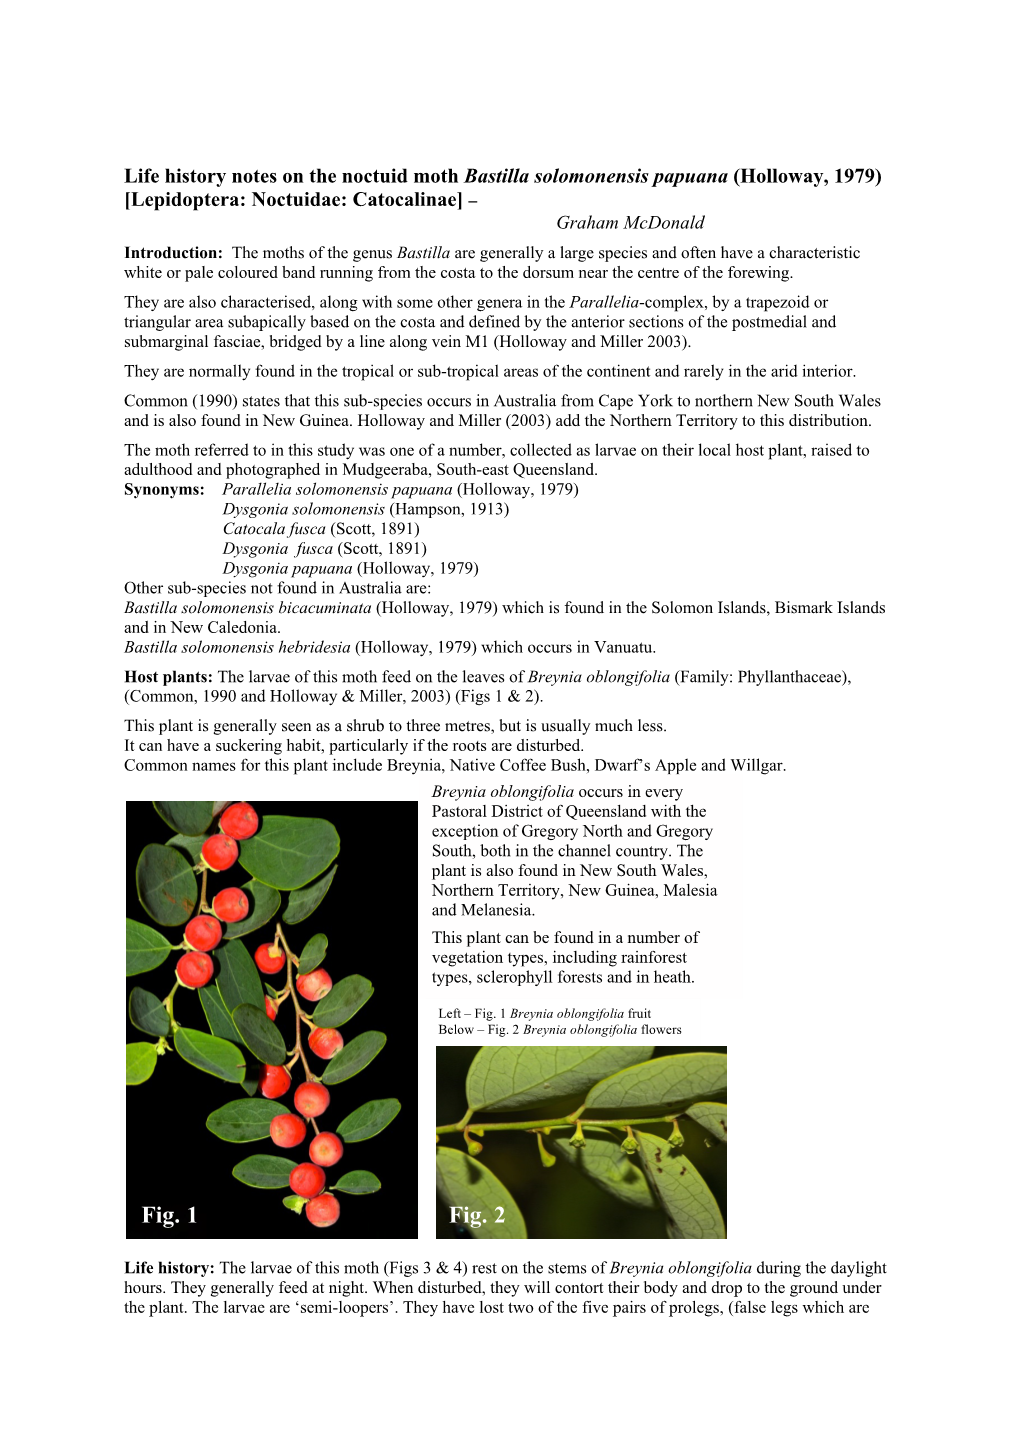 Life History Notes on the Noctuid Moth Bastilla , Solomonensis Papuana